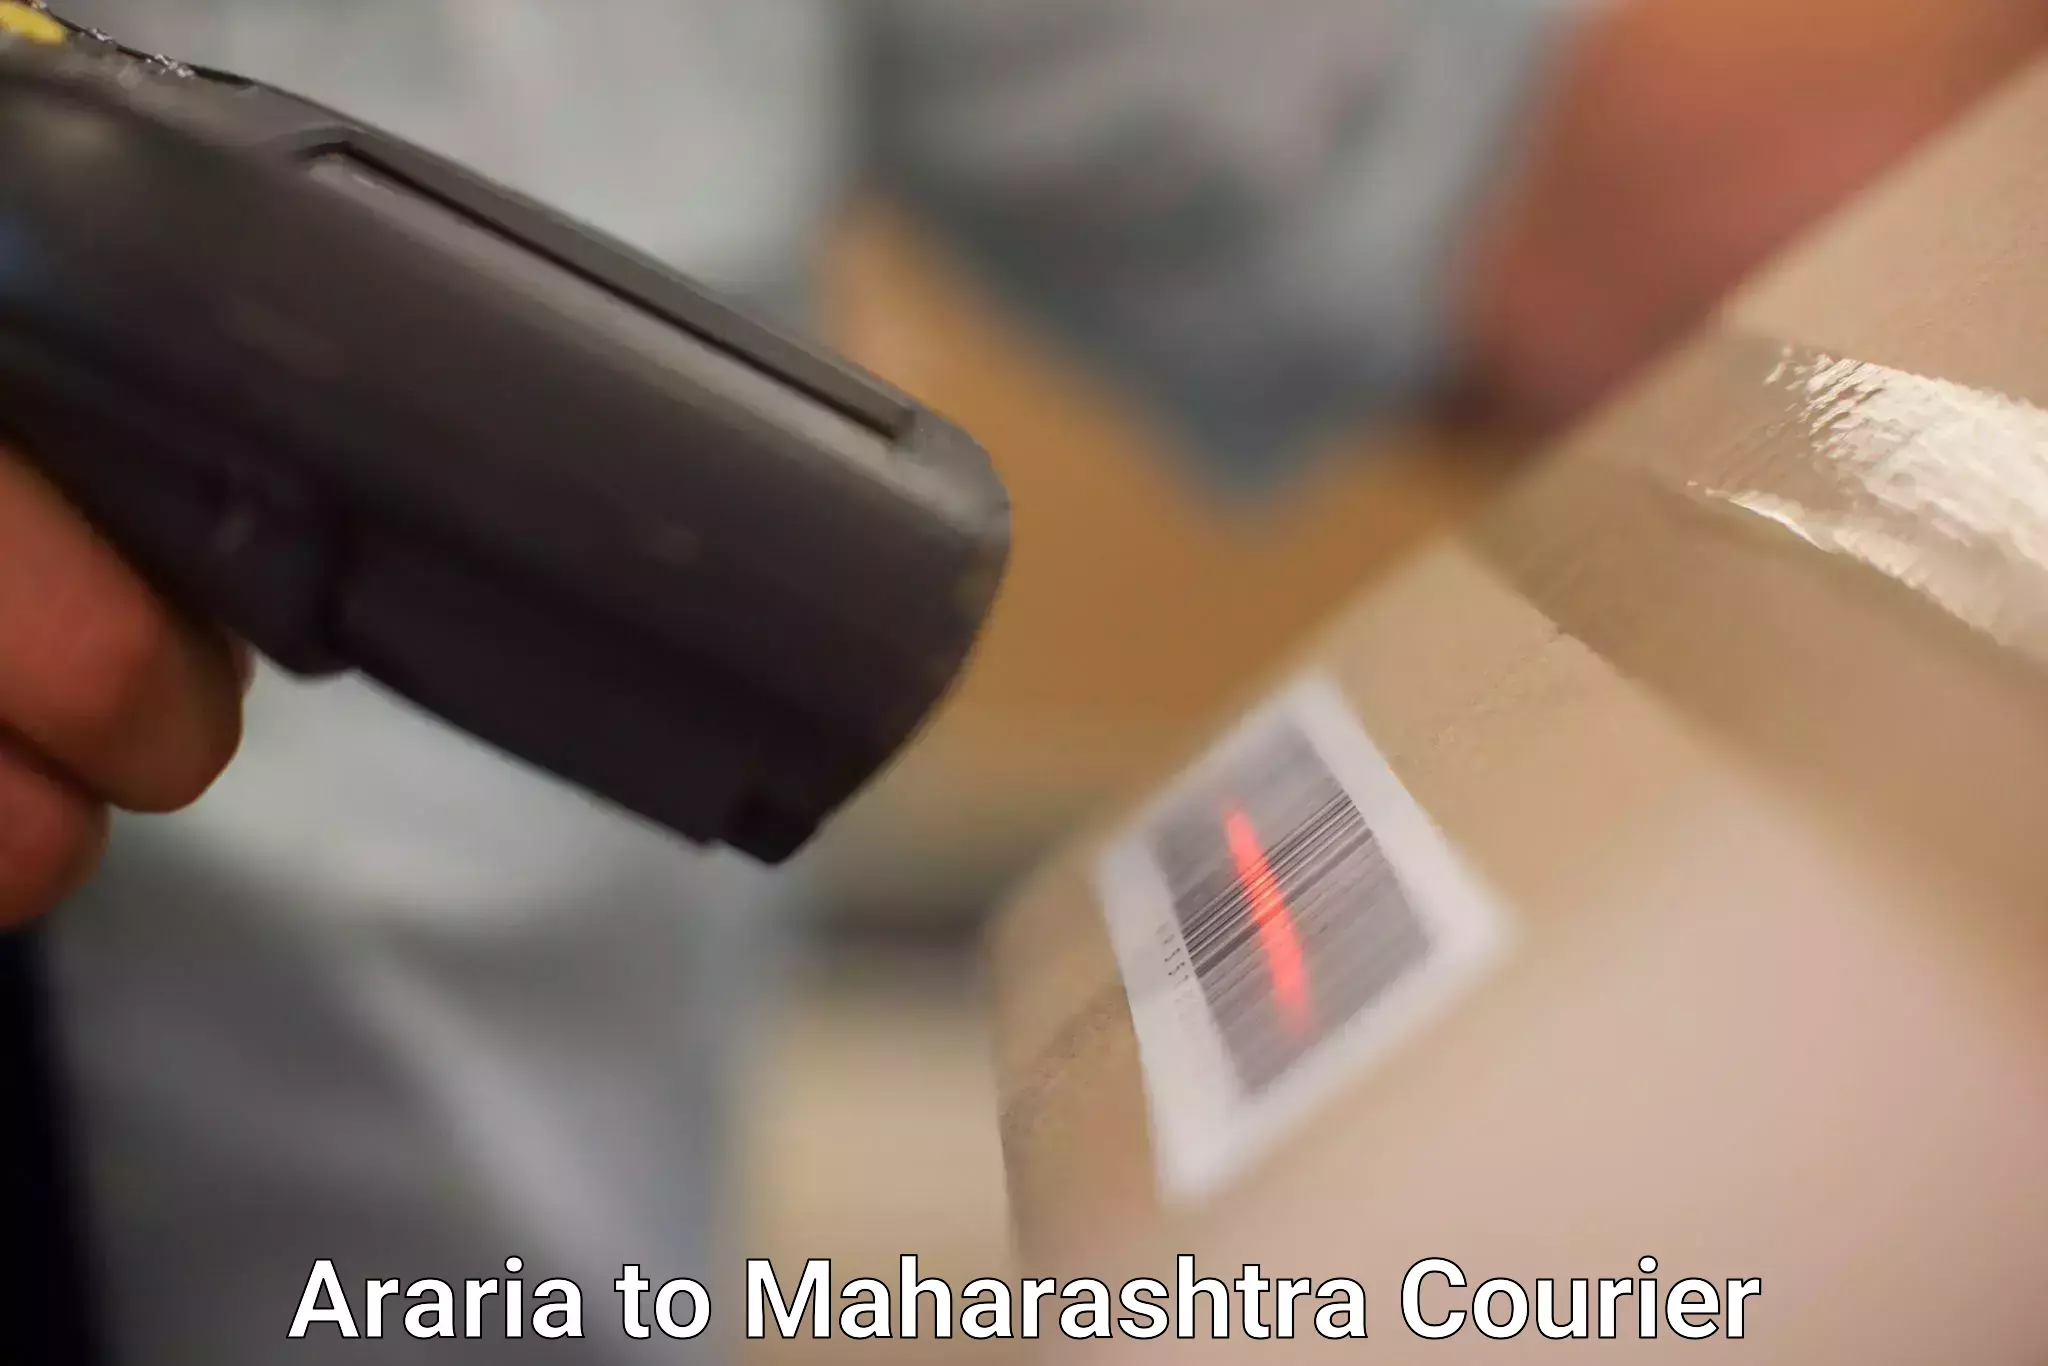 Courier service booking Araria to Homi Bhabha National Institute Mumbai